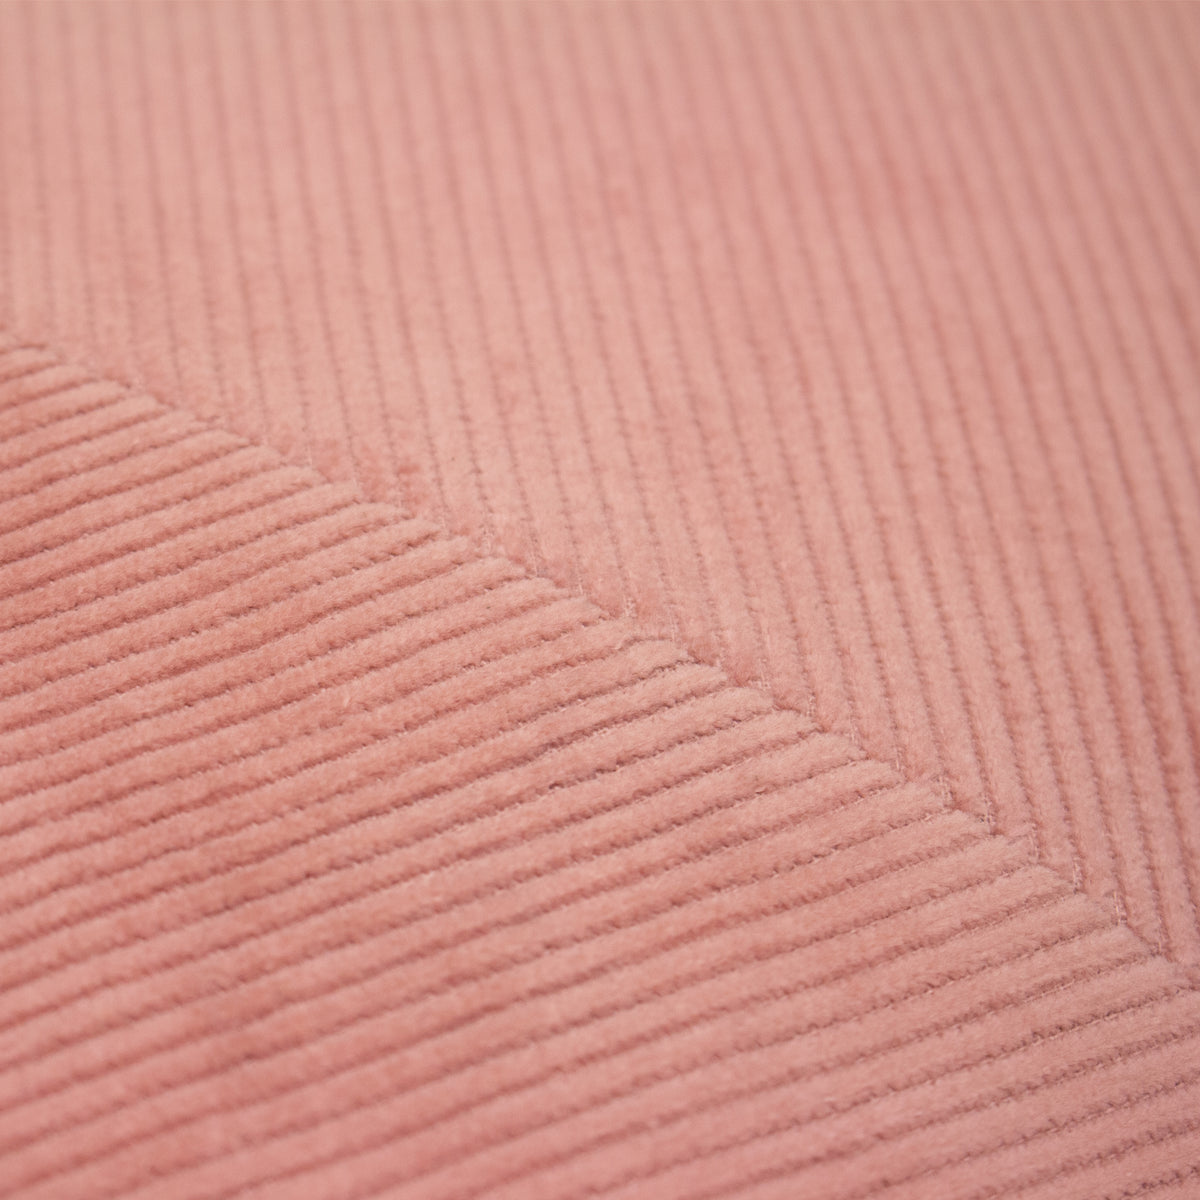 Sisson Polyester Cushion | Pink